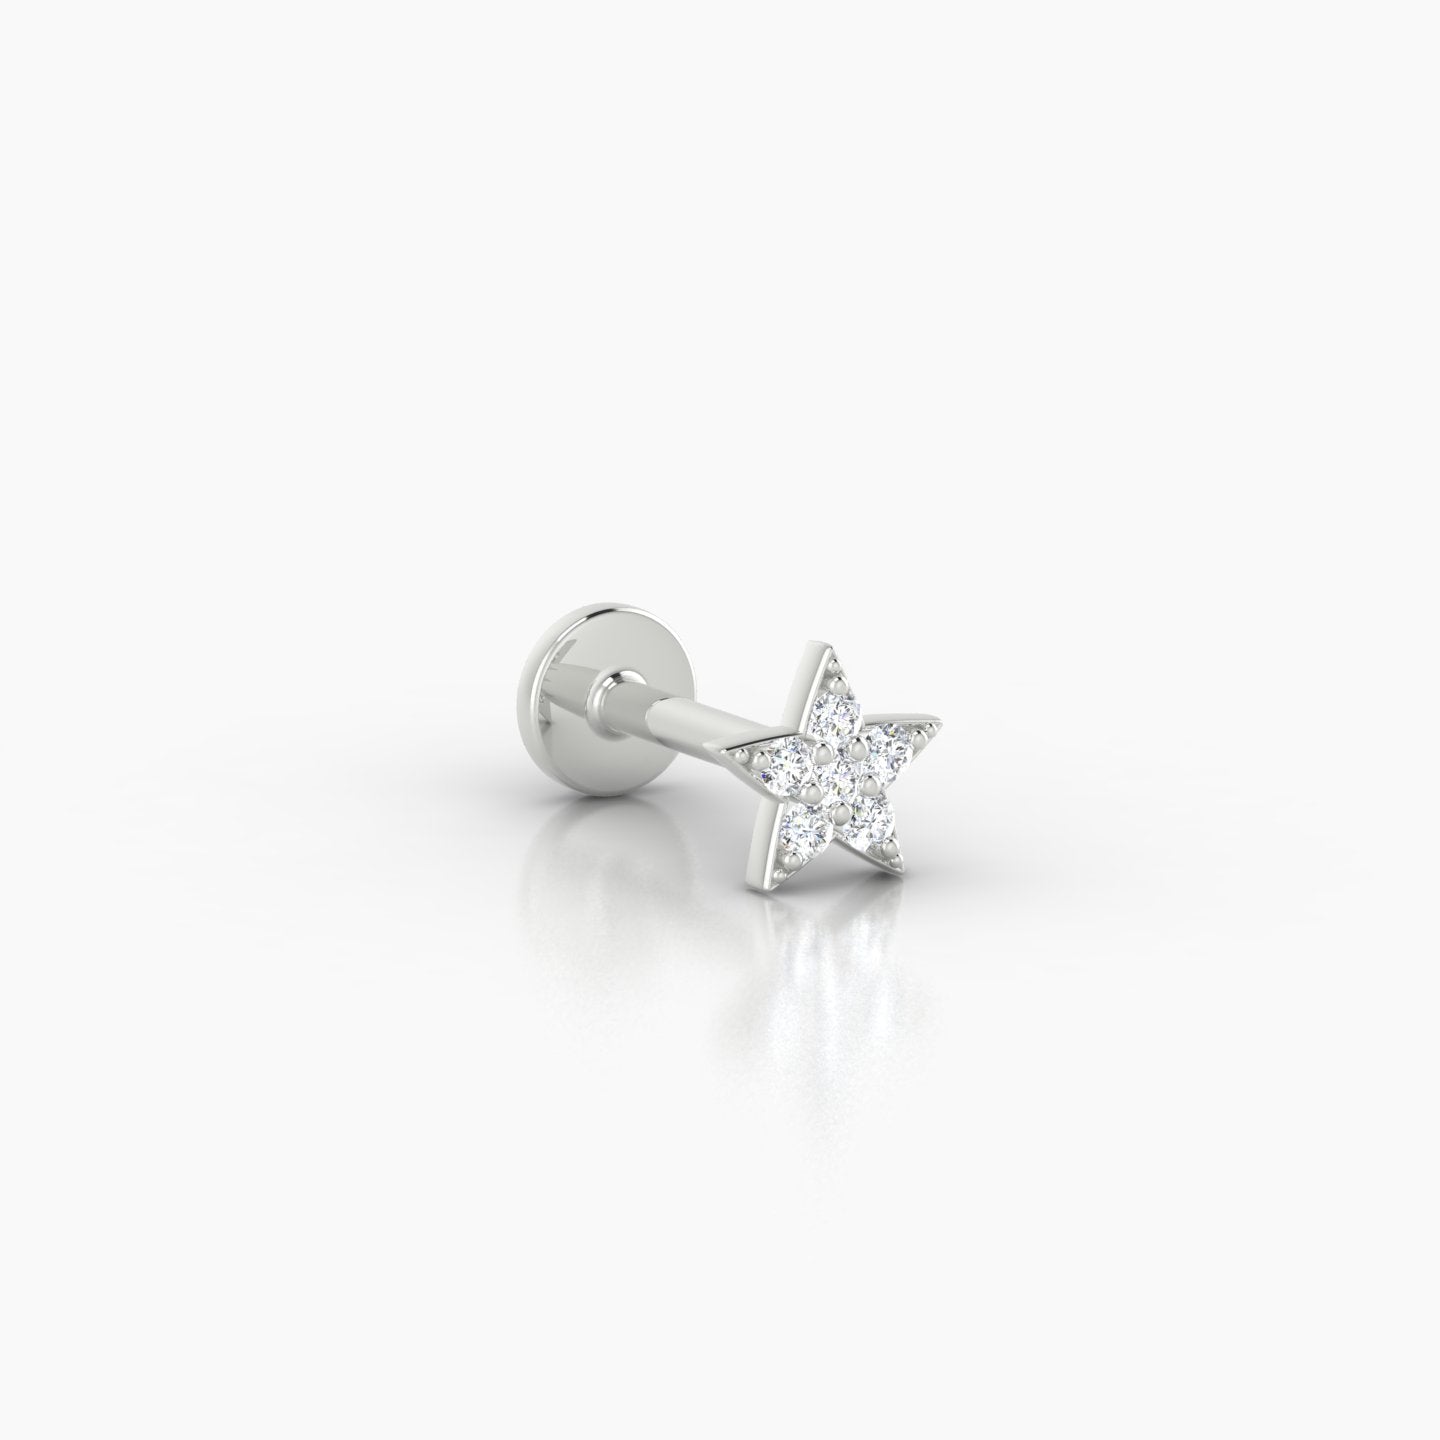 Asteria | 18k White Gold 5 mm Star Diamond Piercing